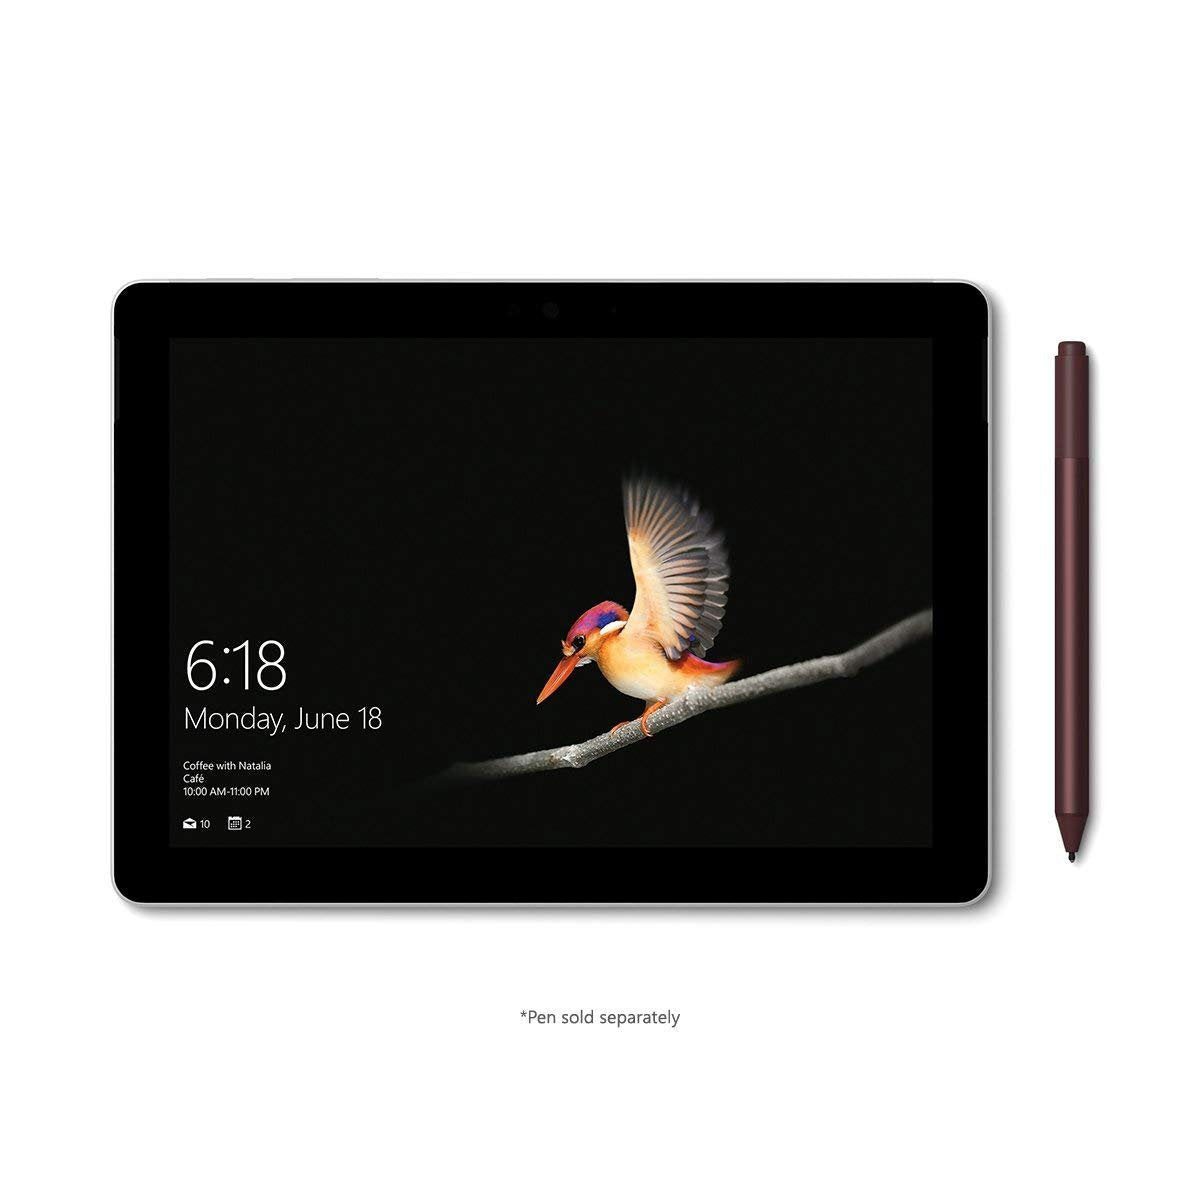 Microsoft Surface Go Tablet PC (Intel Pentium Gold, 4GB RAM, 64GB)